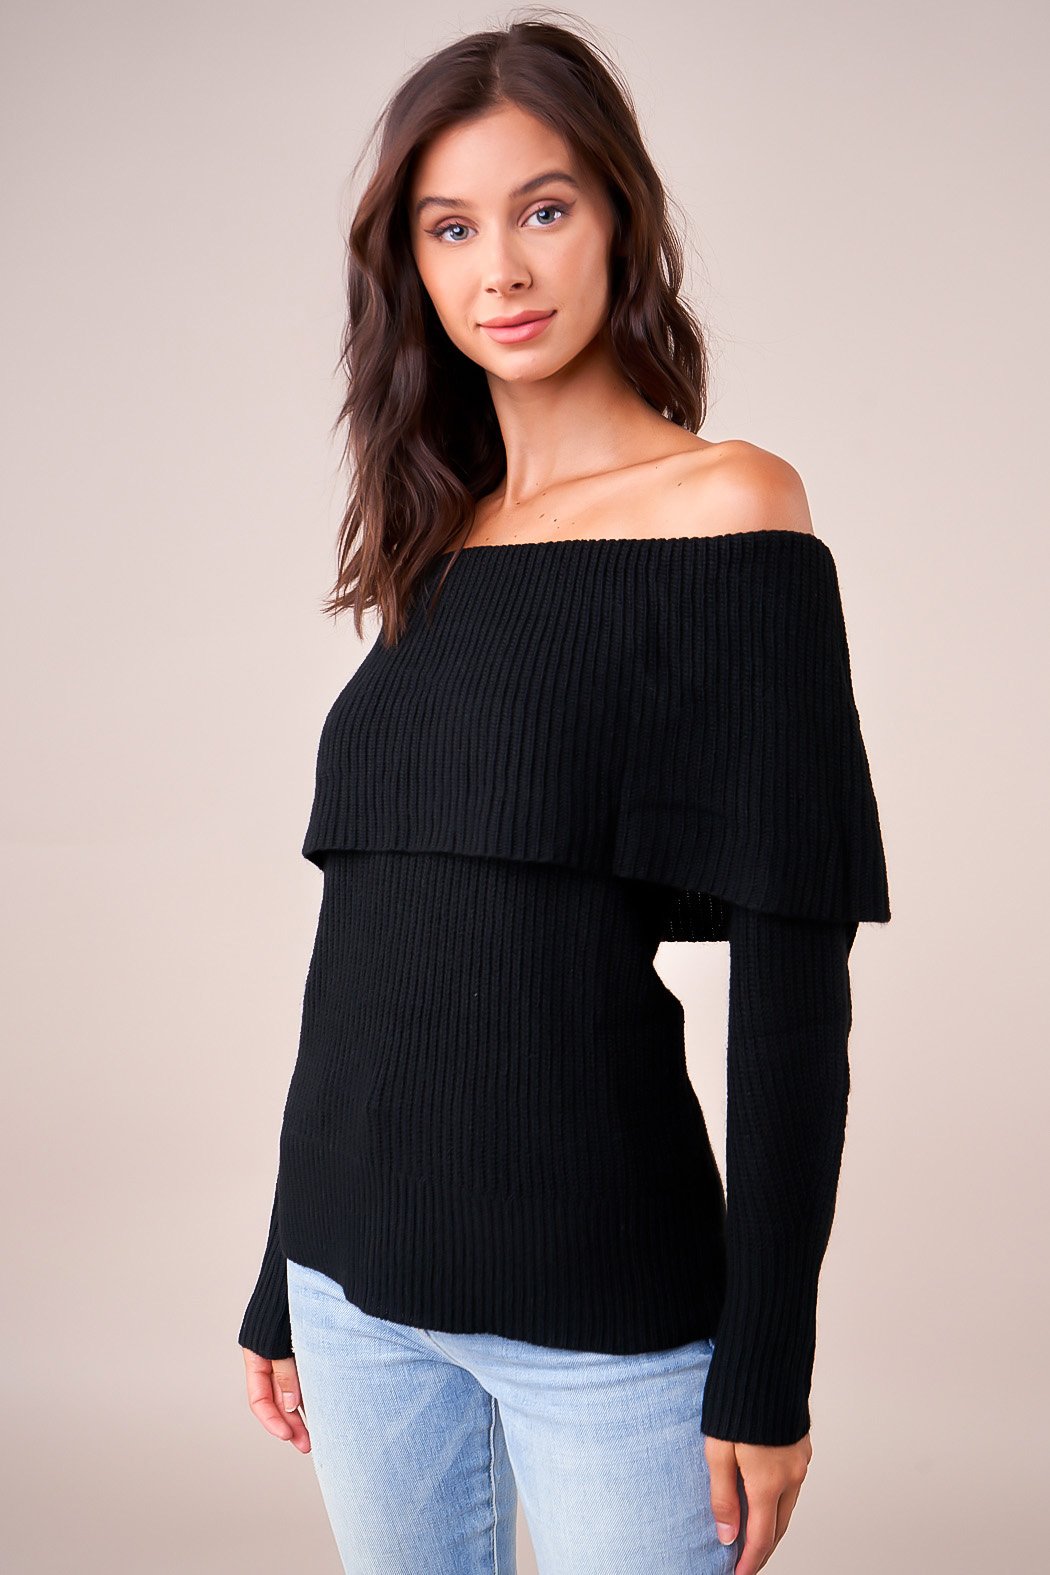 Allegra Off The Shoulder Sweater – Sugarlips